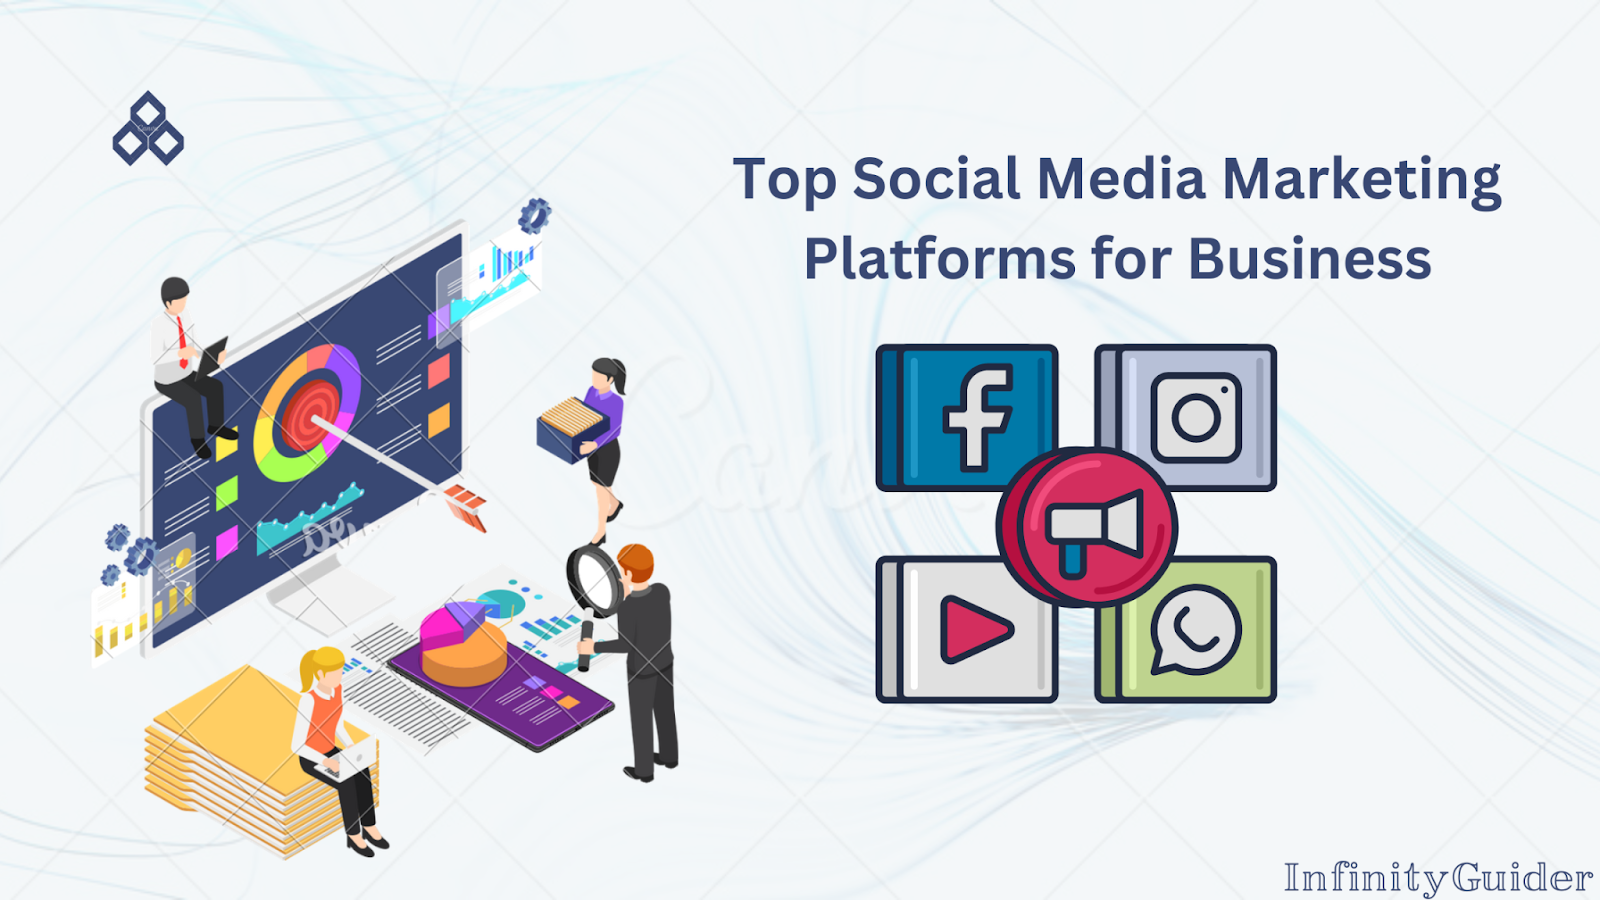 Top Social Media Marketing Platforms for Business